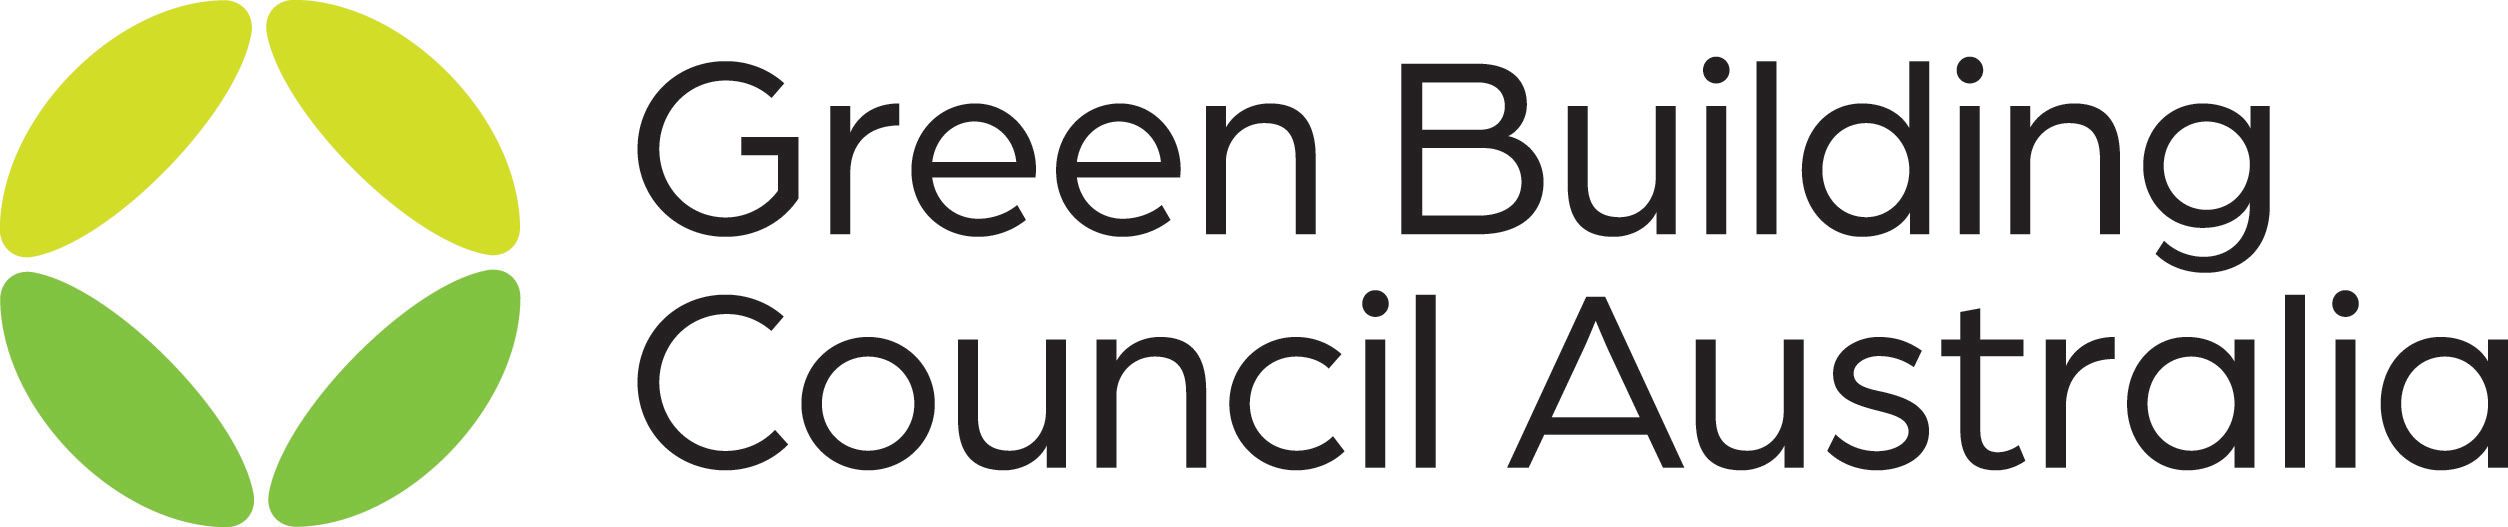 Sydney Build Green Building Council Australia Logo